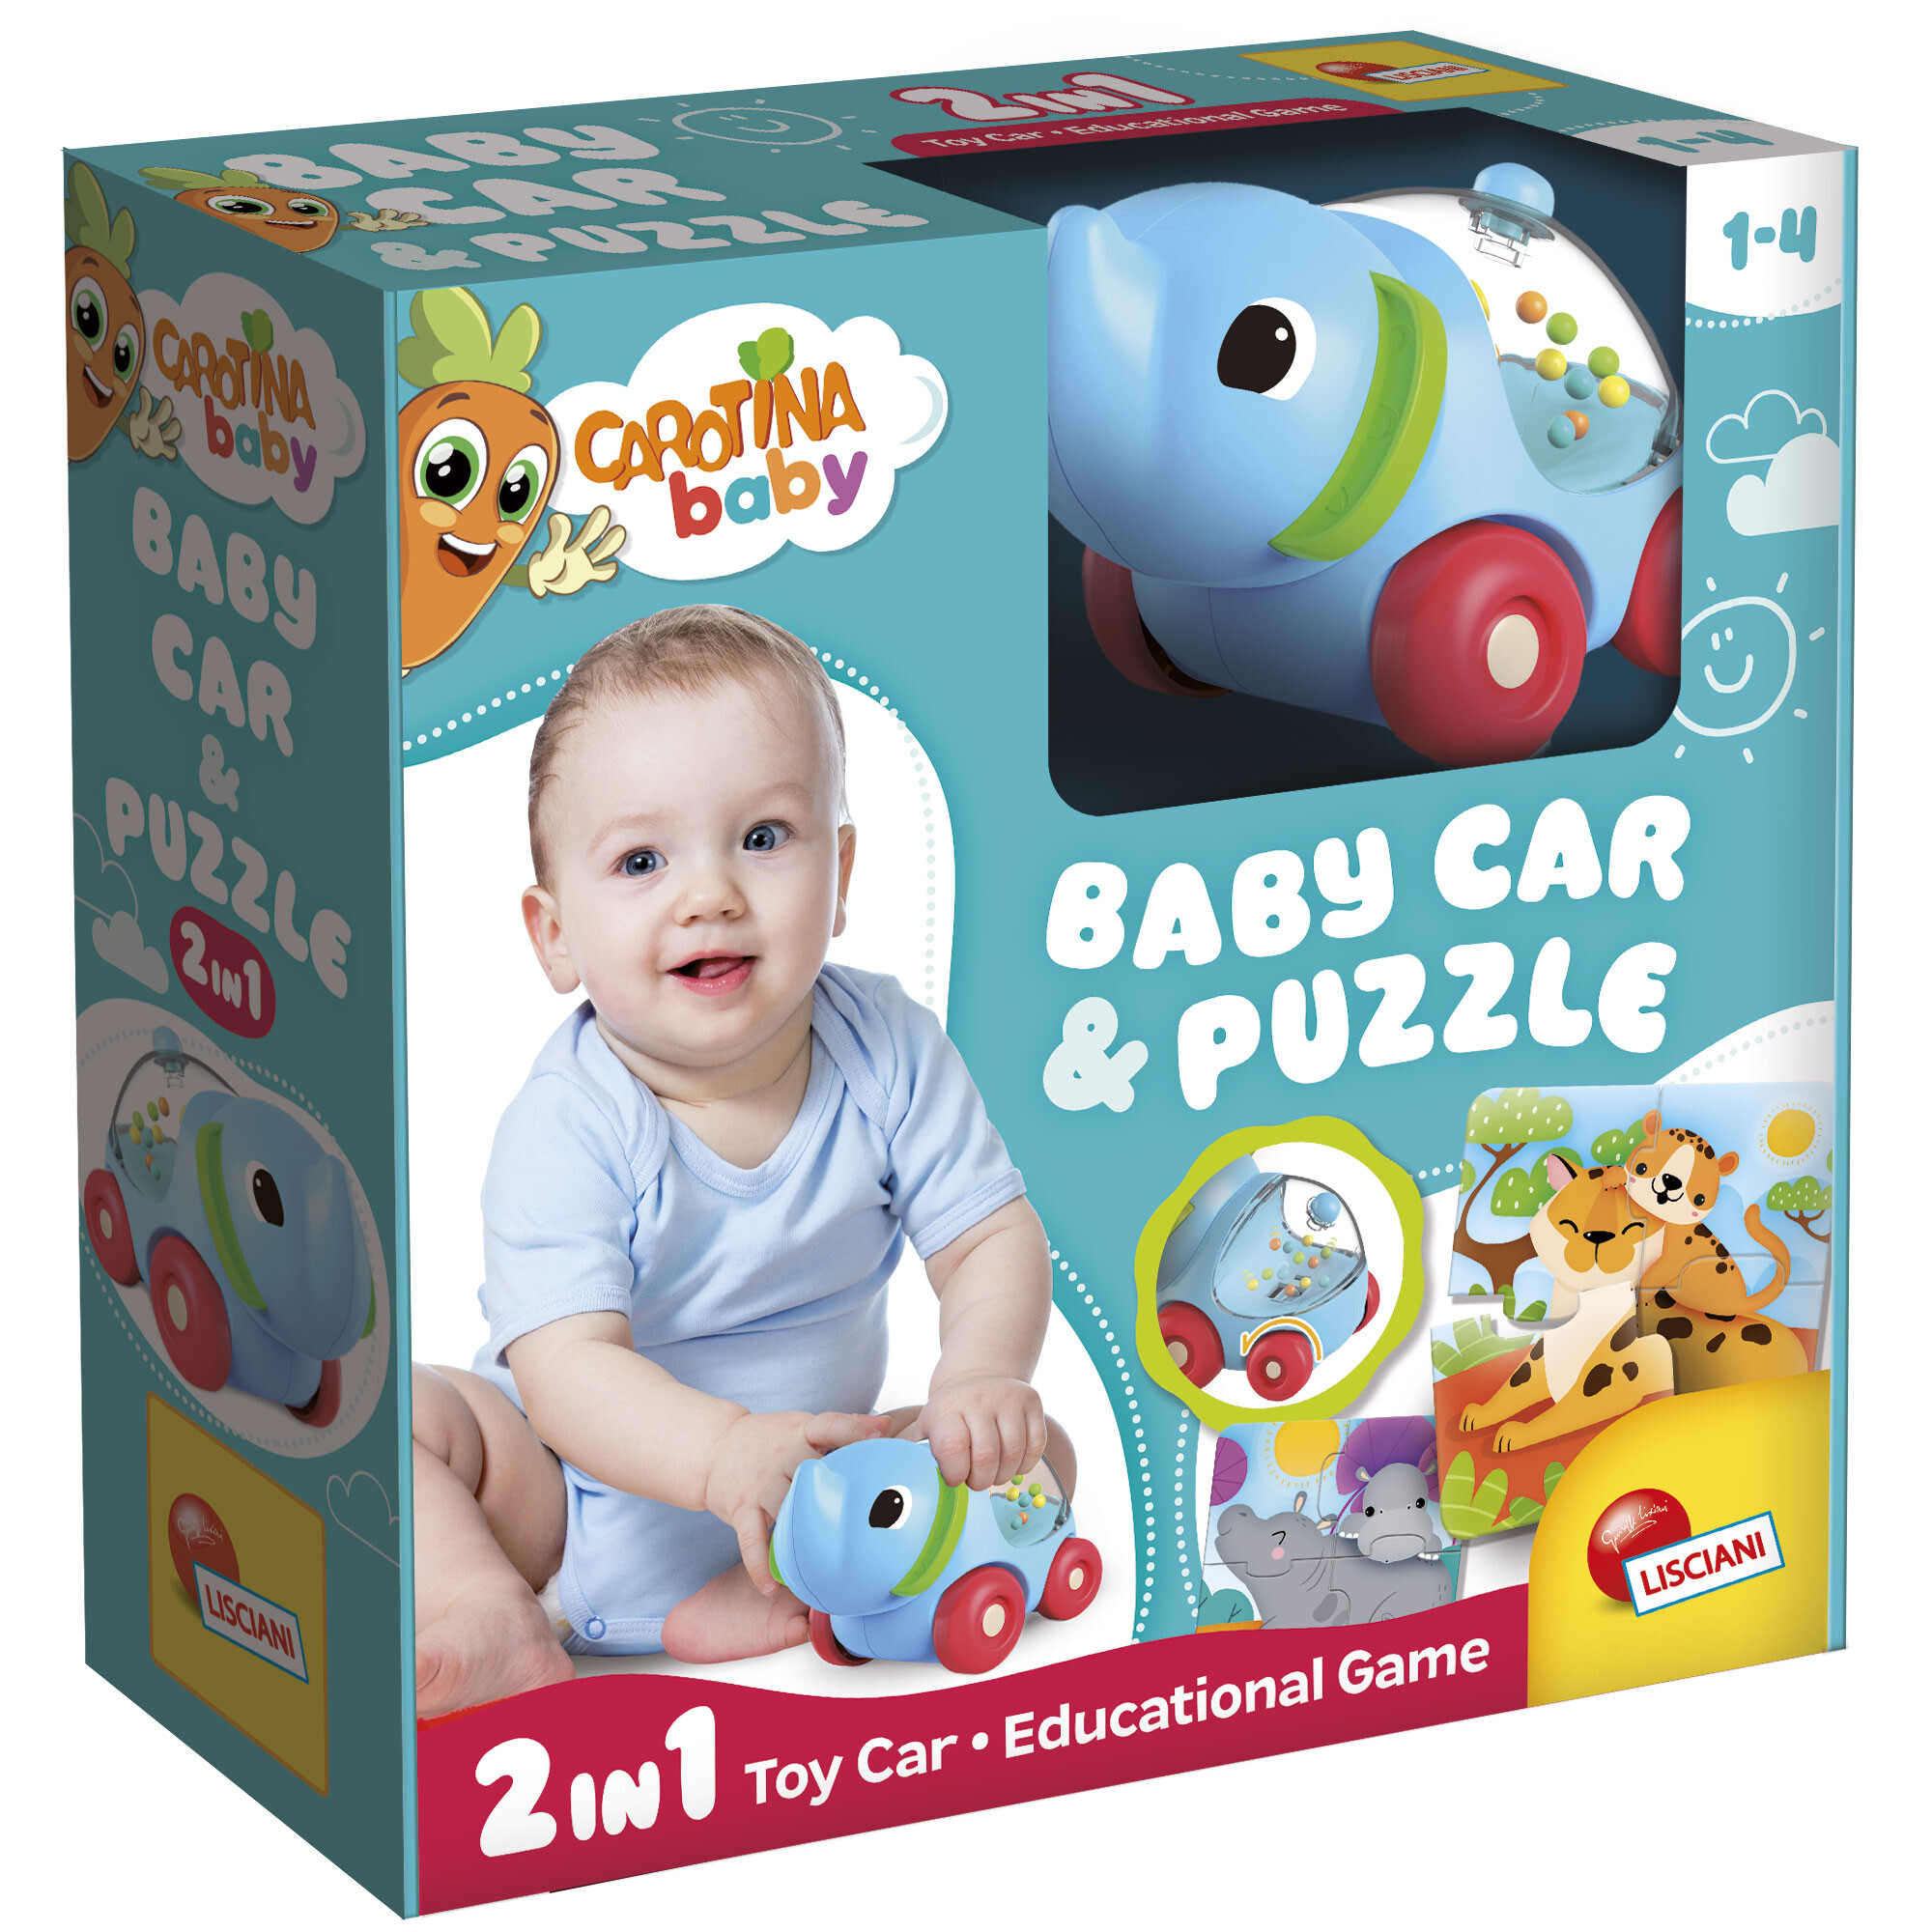 Carotina baby elephant car & puzzle - 